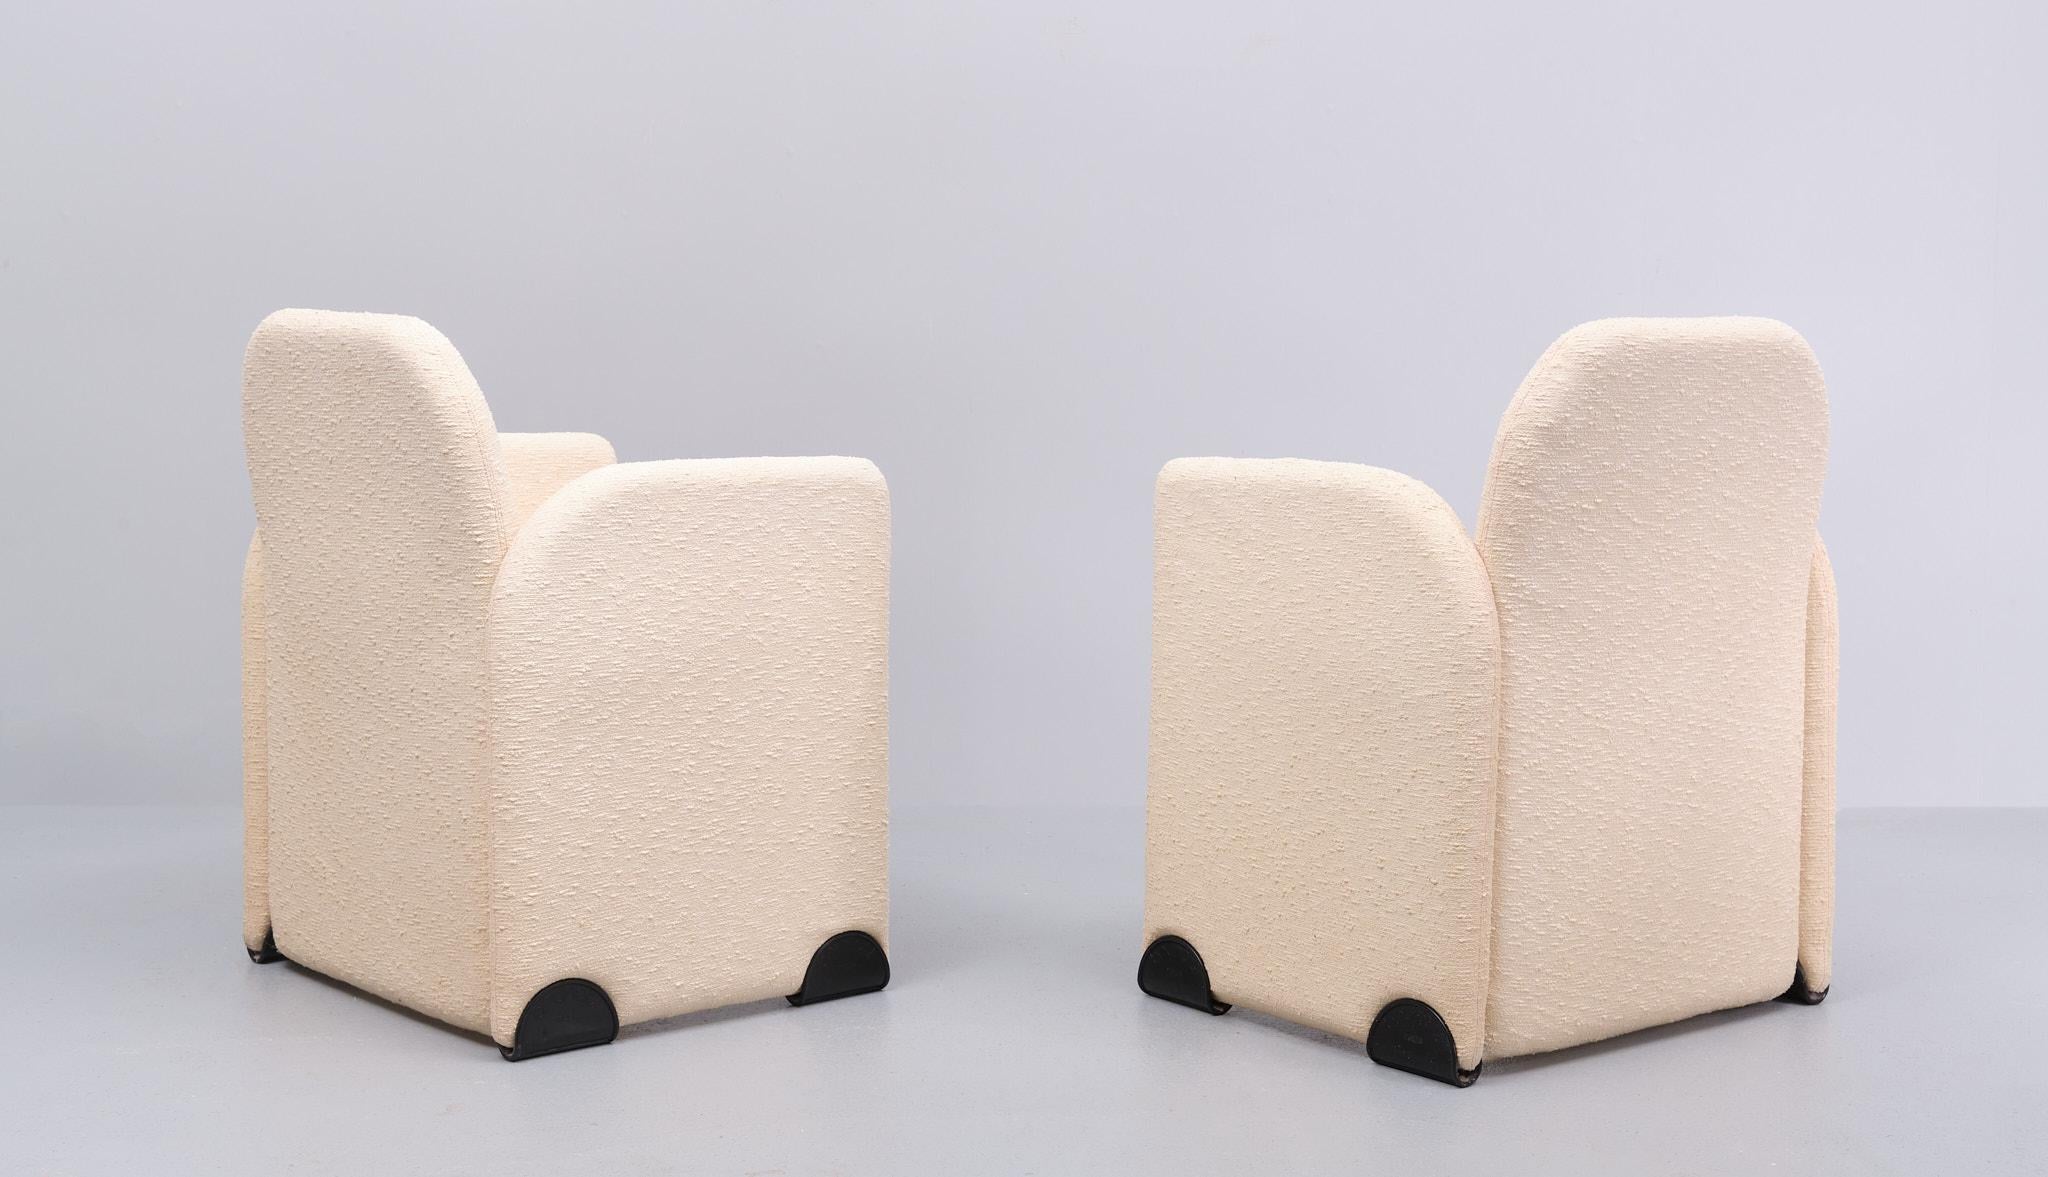 Vintage Italian Lounge Chair s Designed Ammannati & Vitelli for Brunati  1970s  For Sale 2